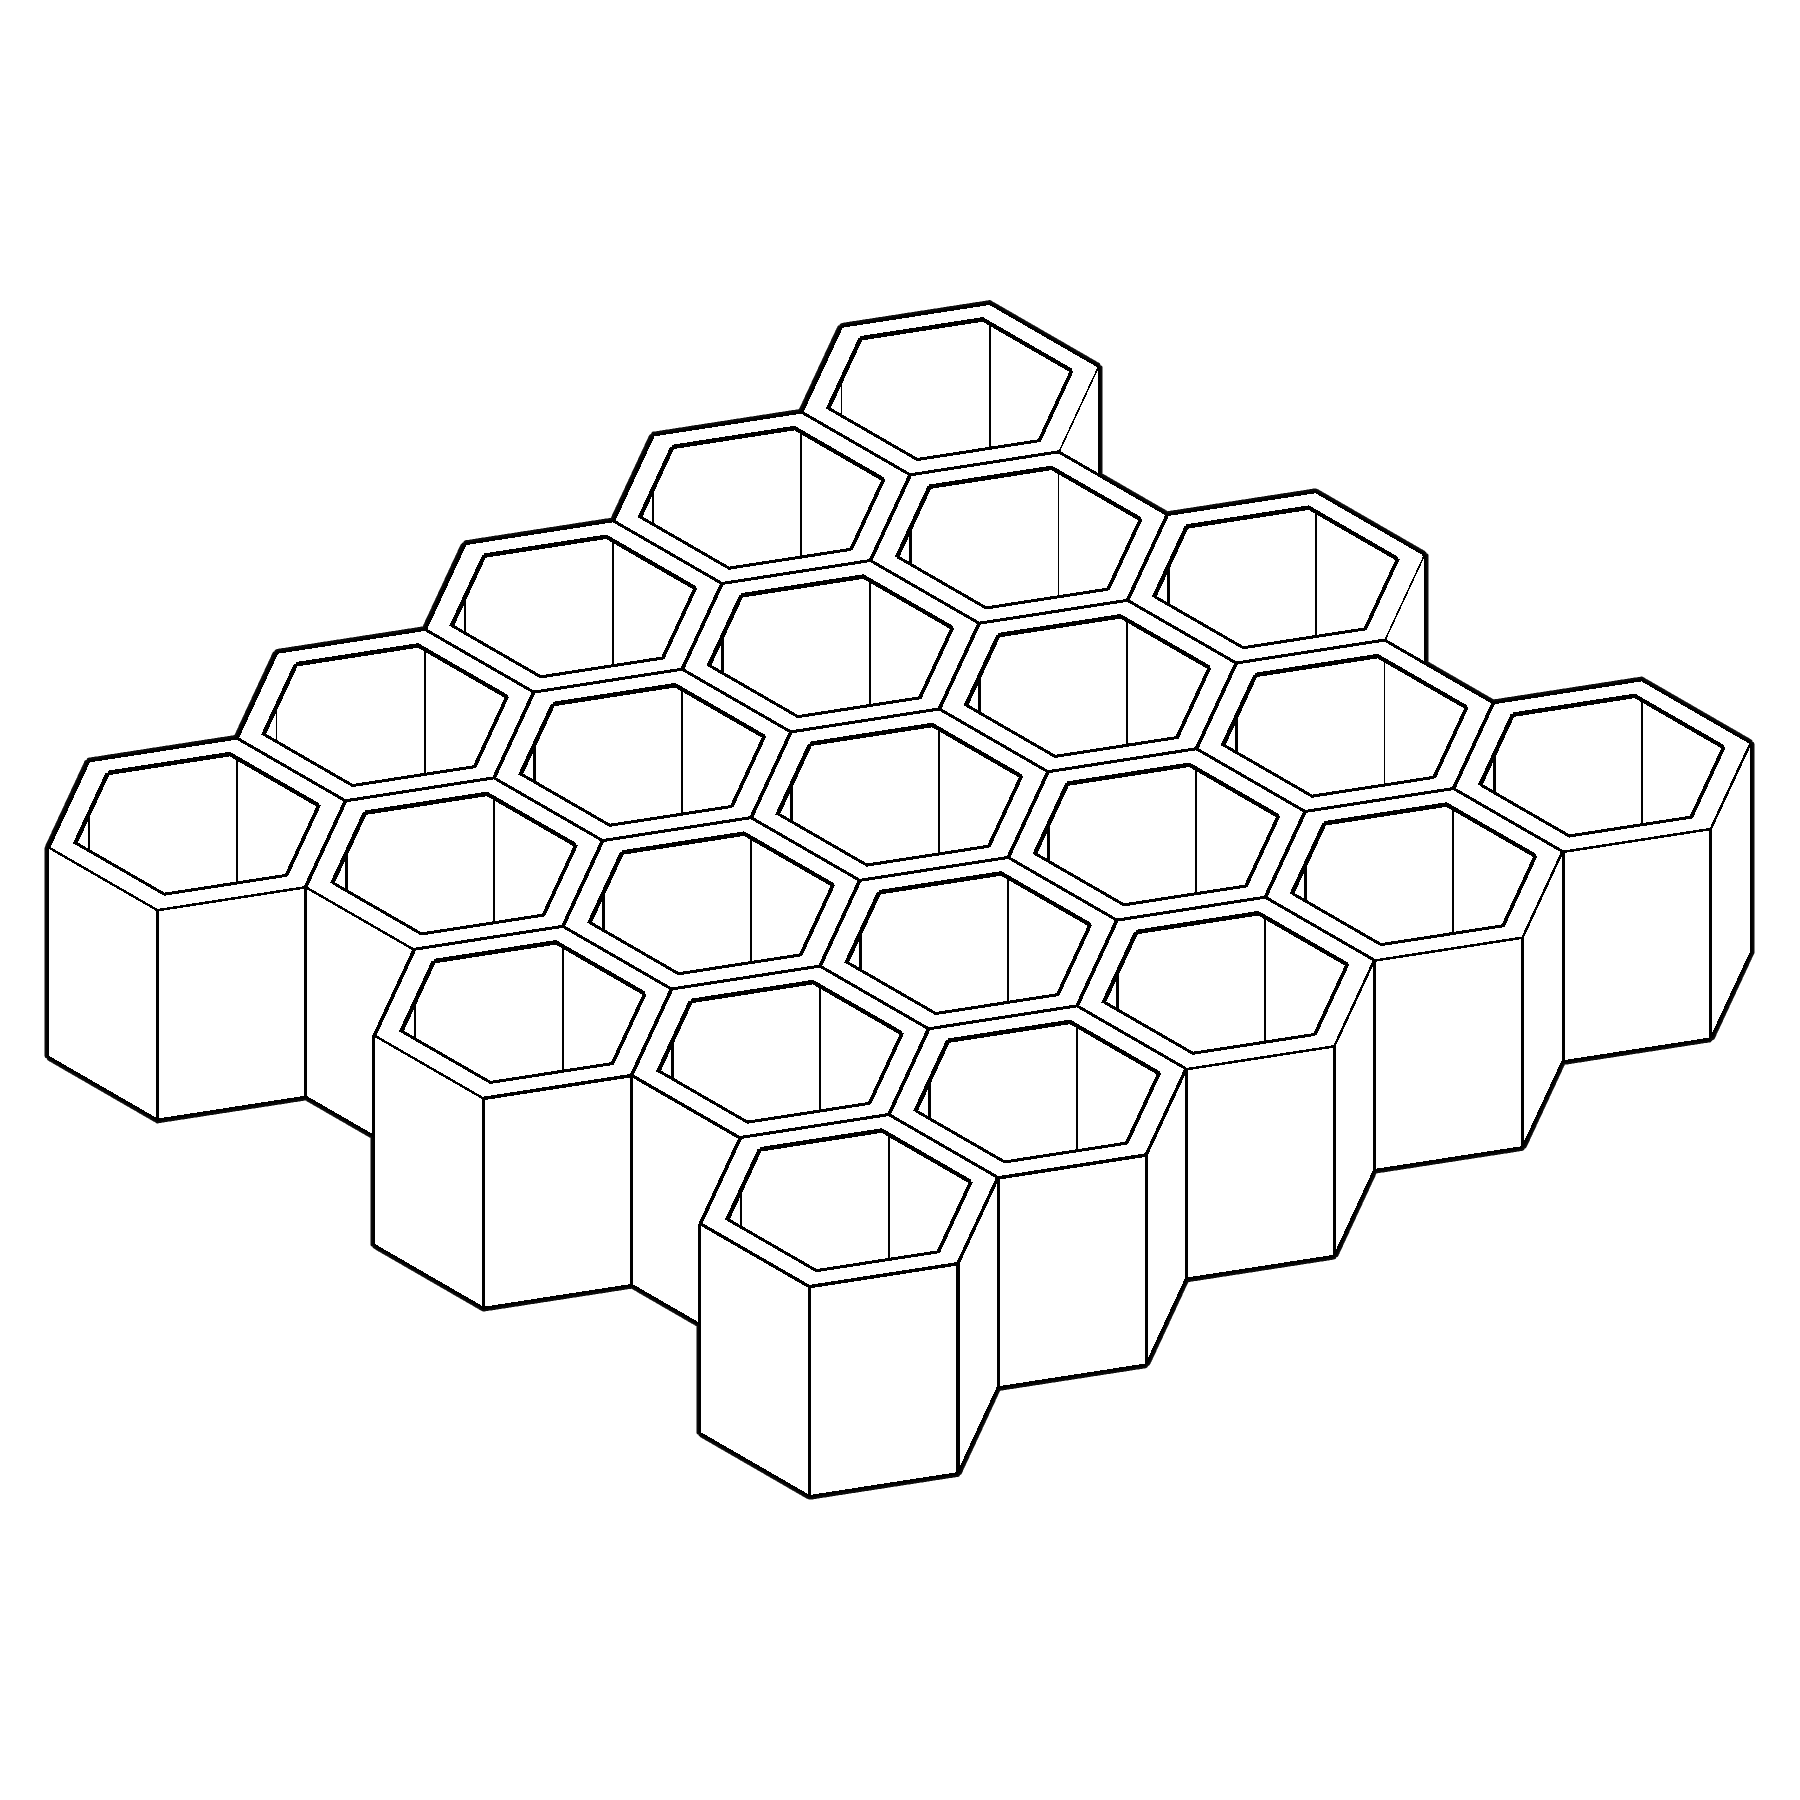 Honeycomb Core